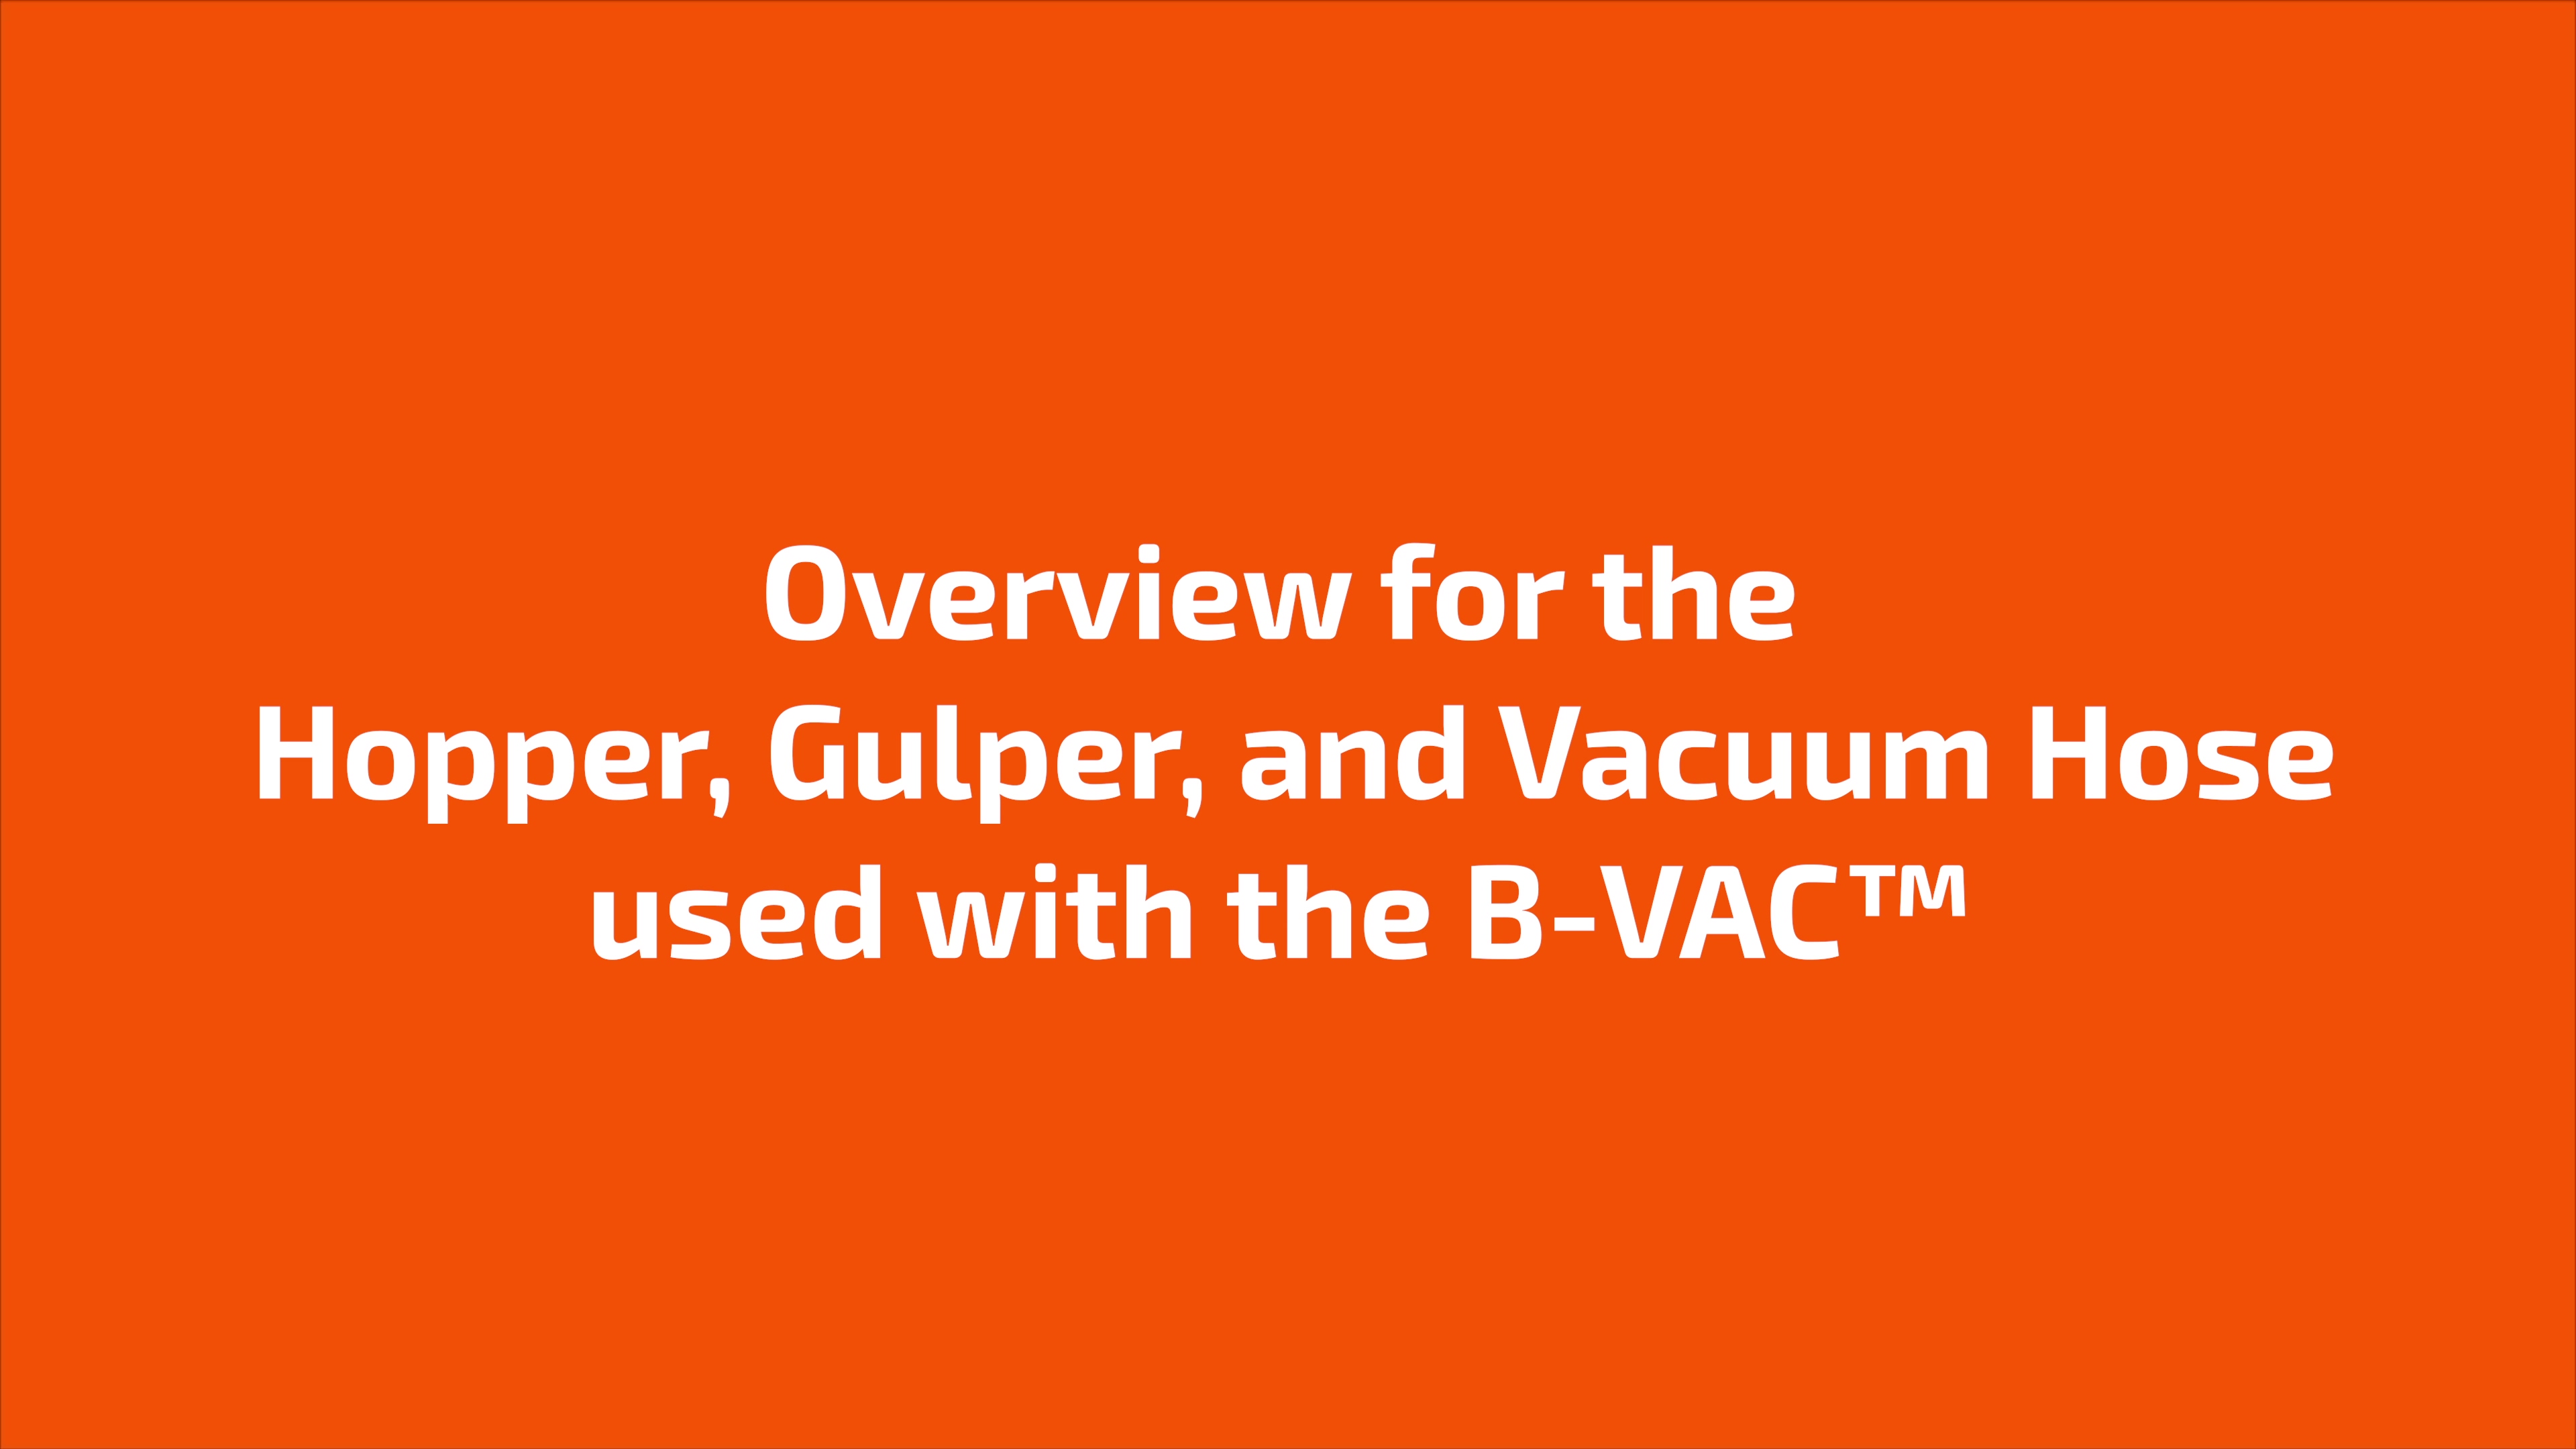 Hopper Gulper and Vacuum hose overview